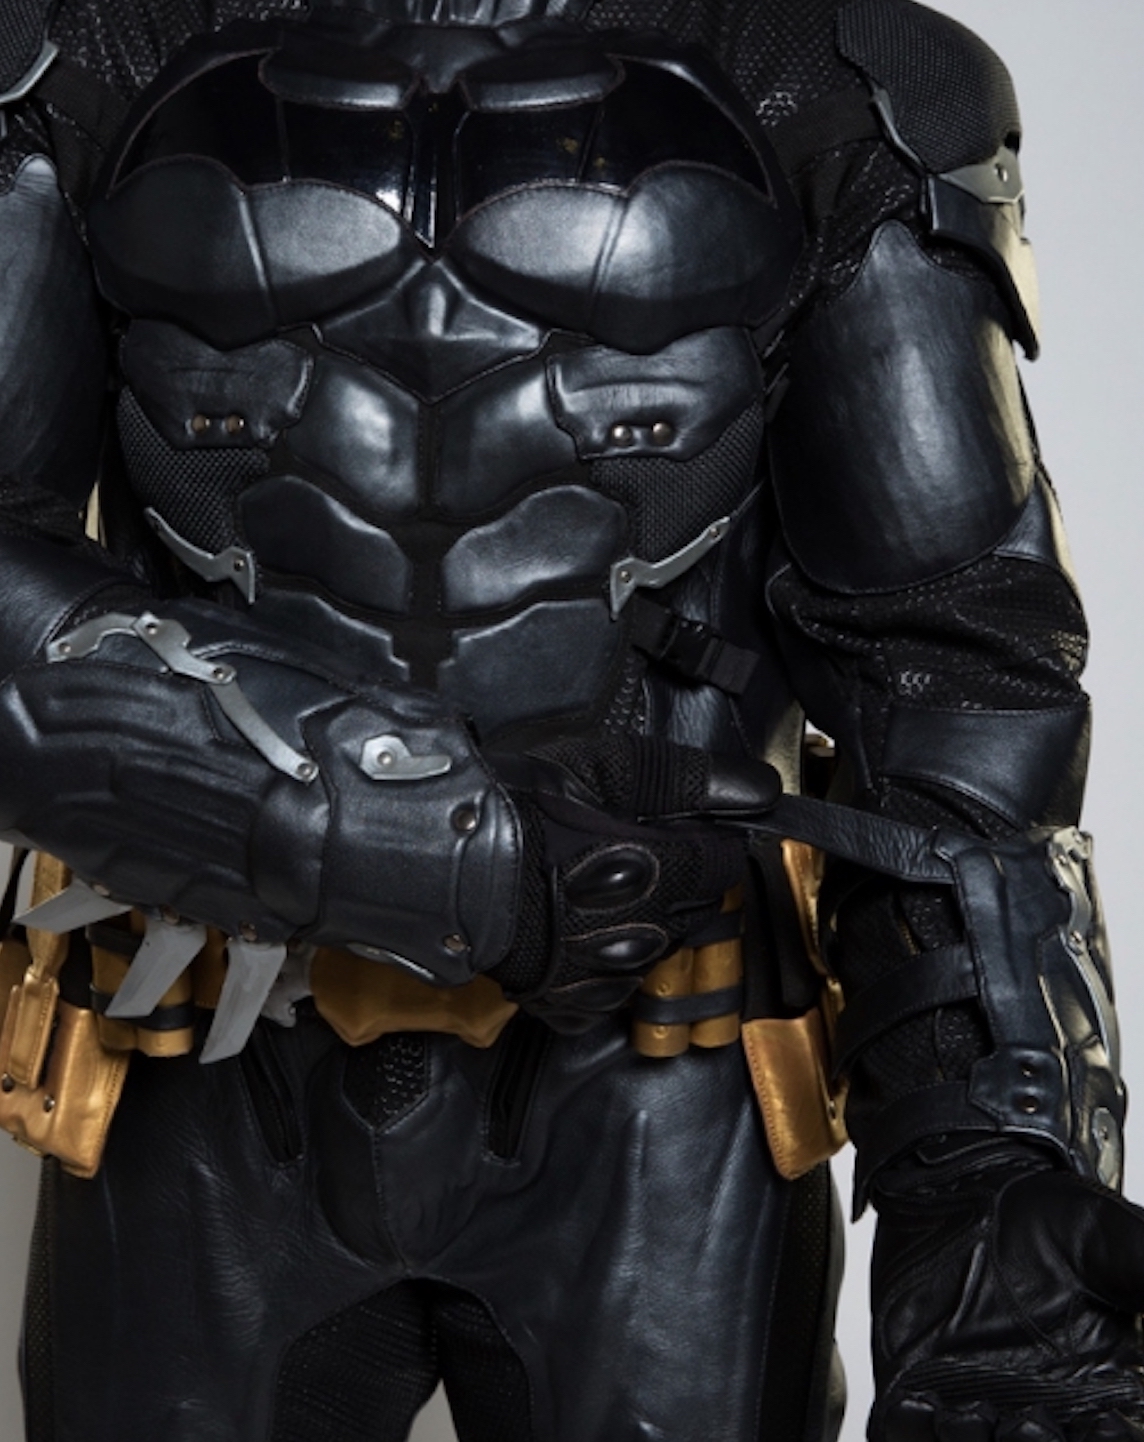 New Man Of Steel Bvs suit. made - Replica Industries